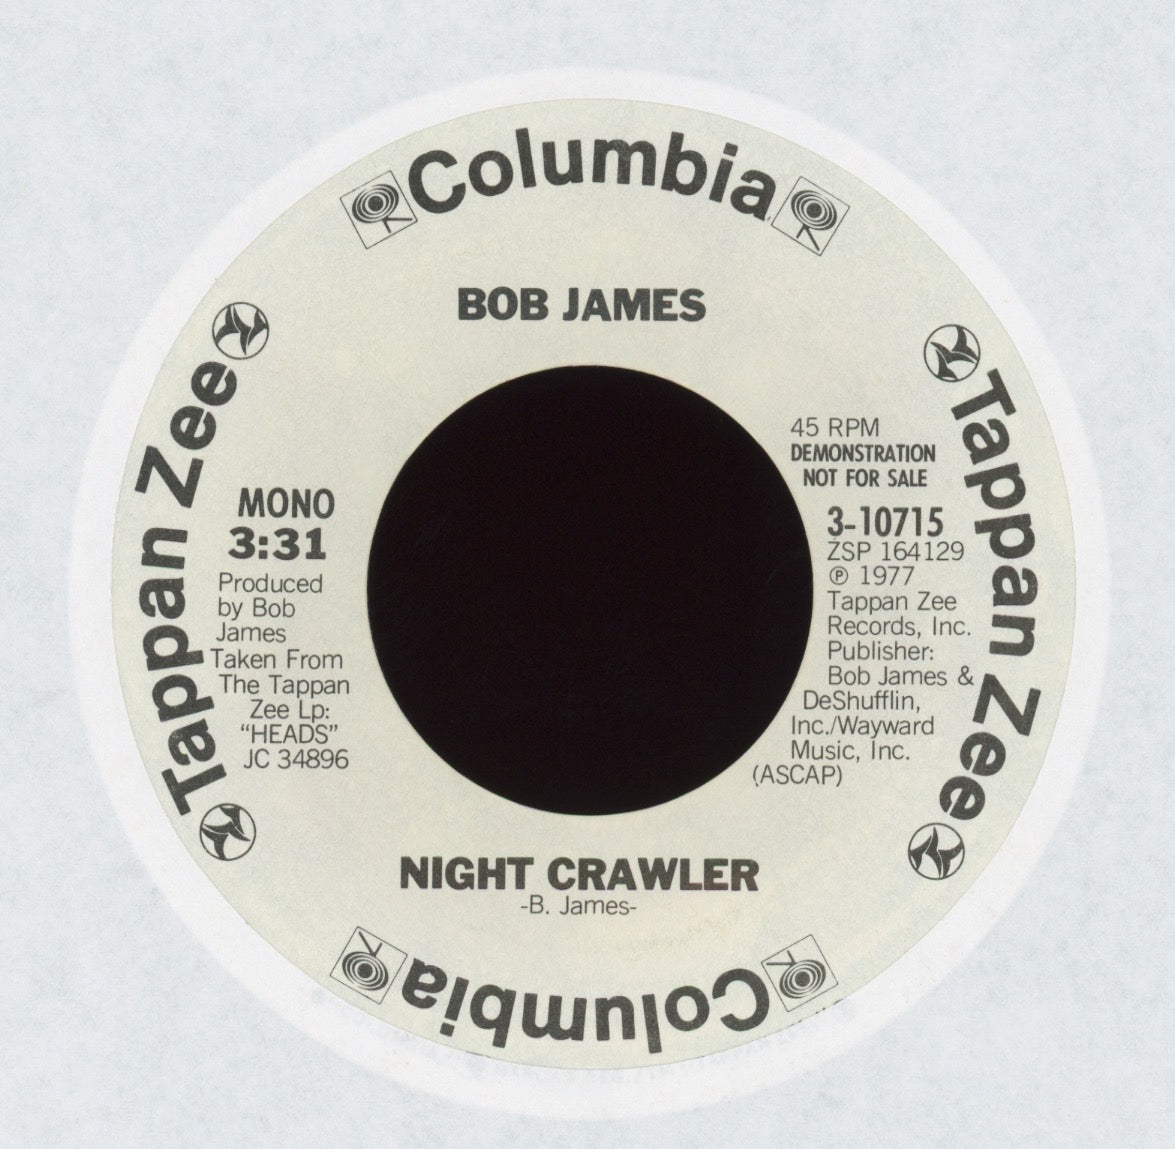 Bob James - Night Crawler on Tappan Zee Promo